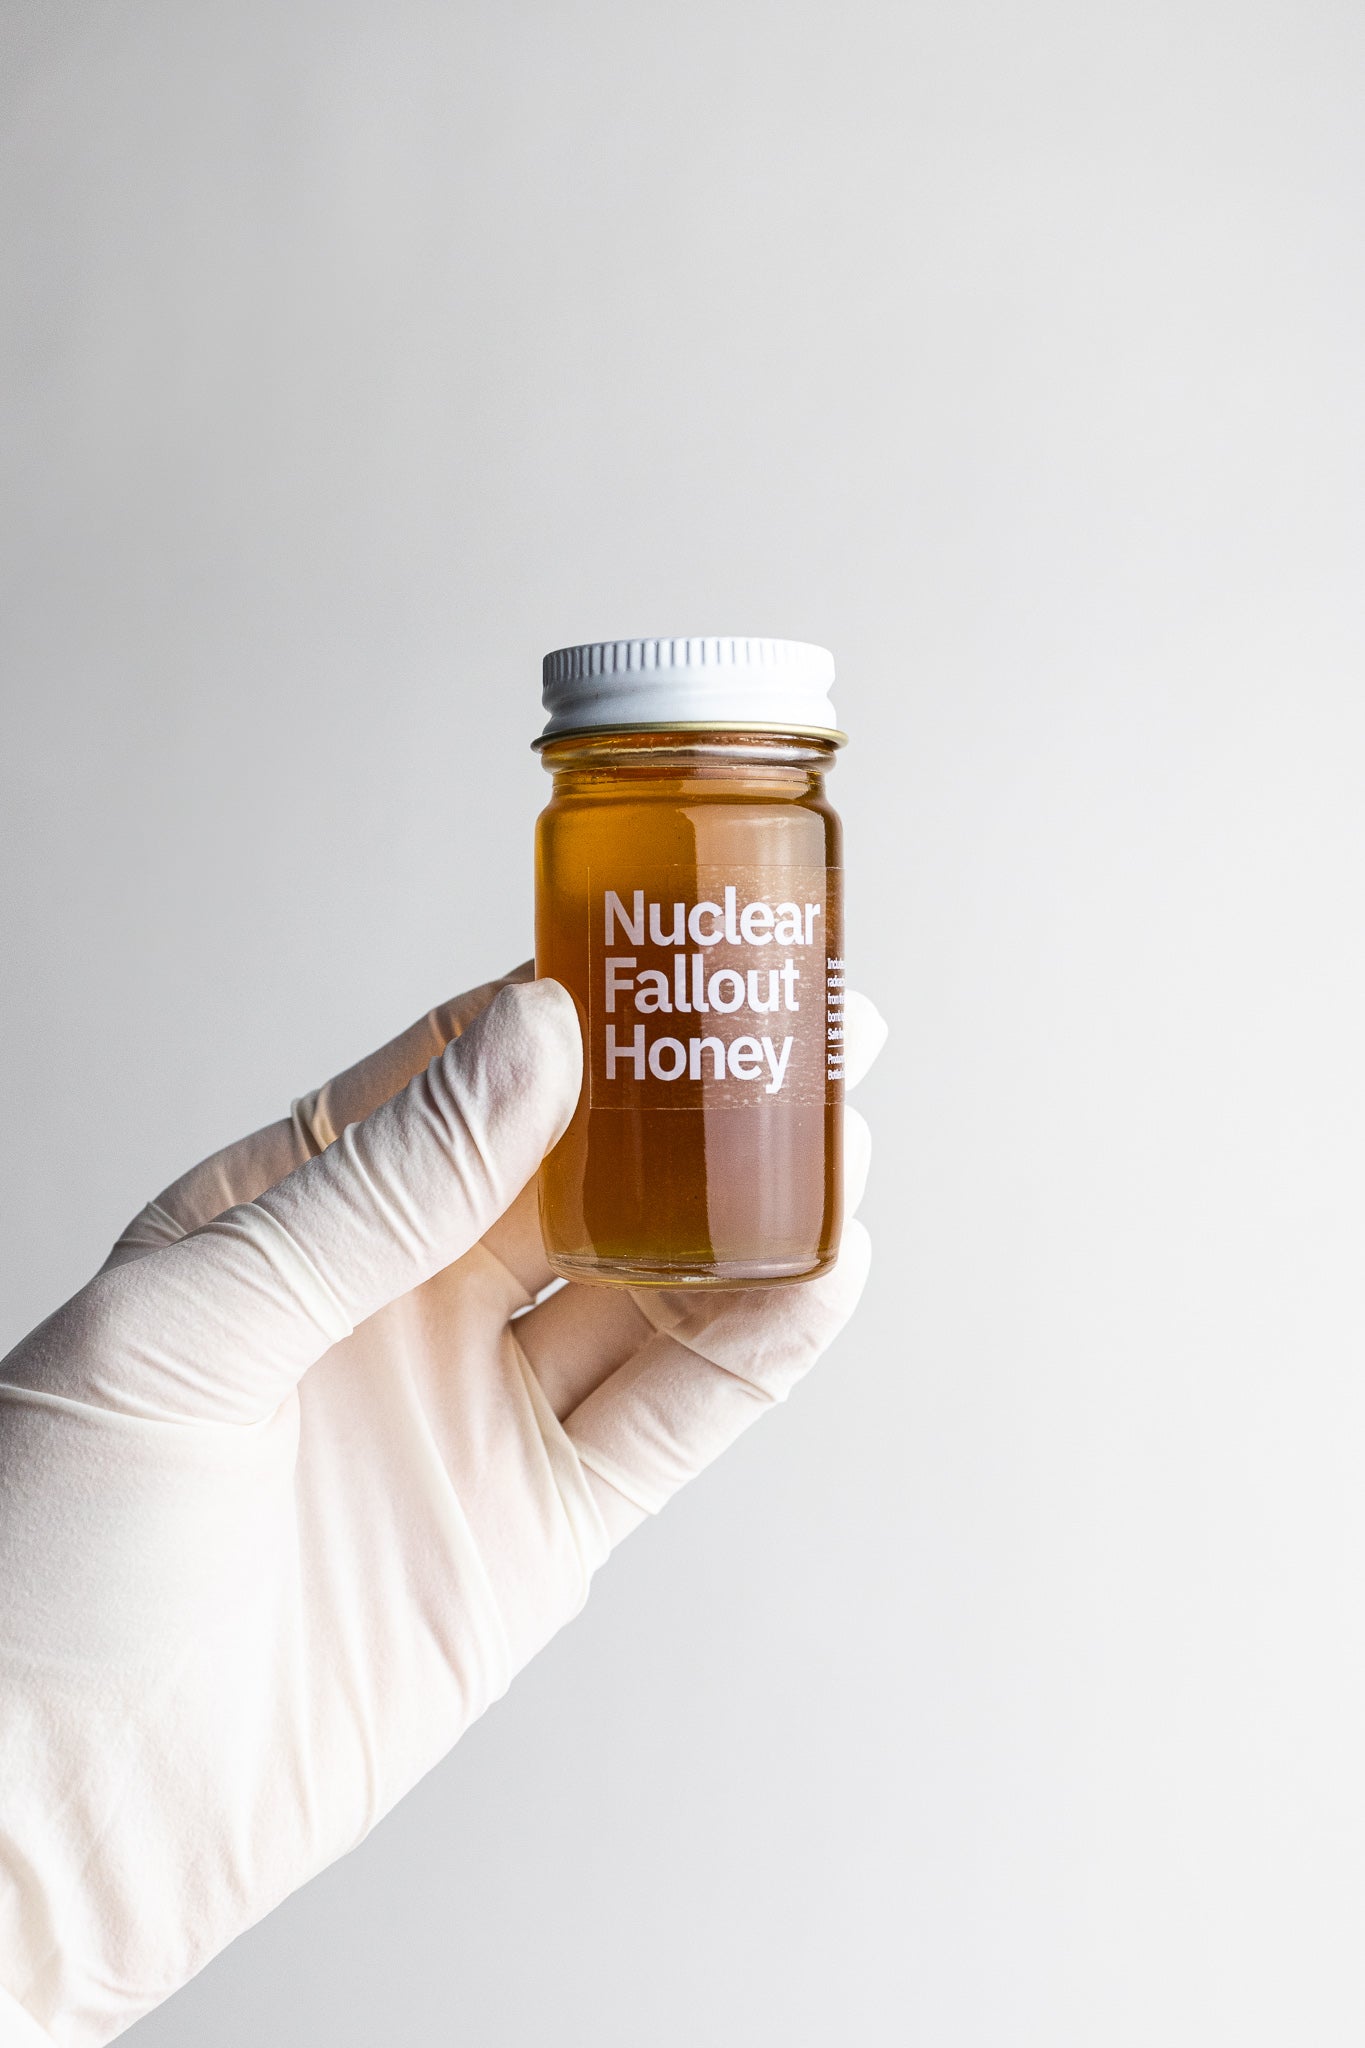 Nuclear Fallout Honey